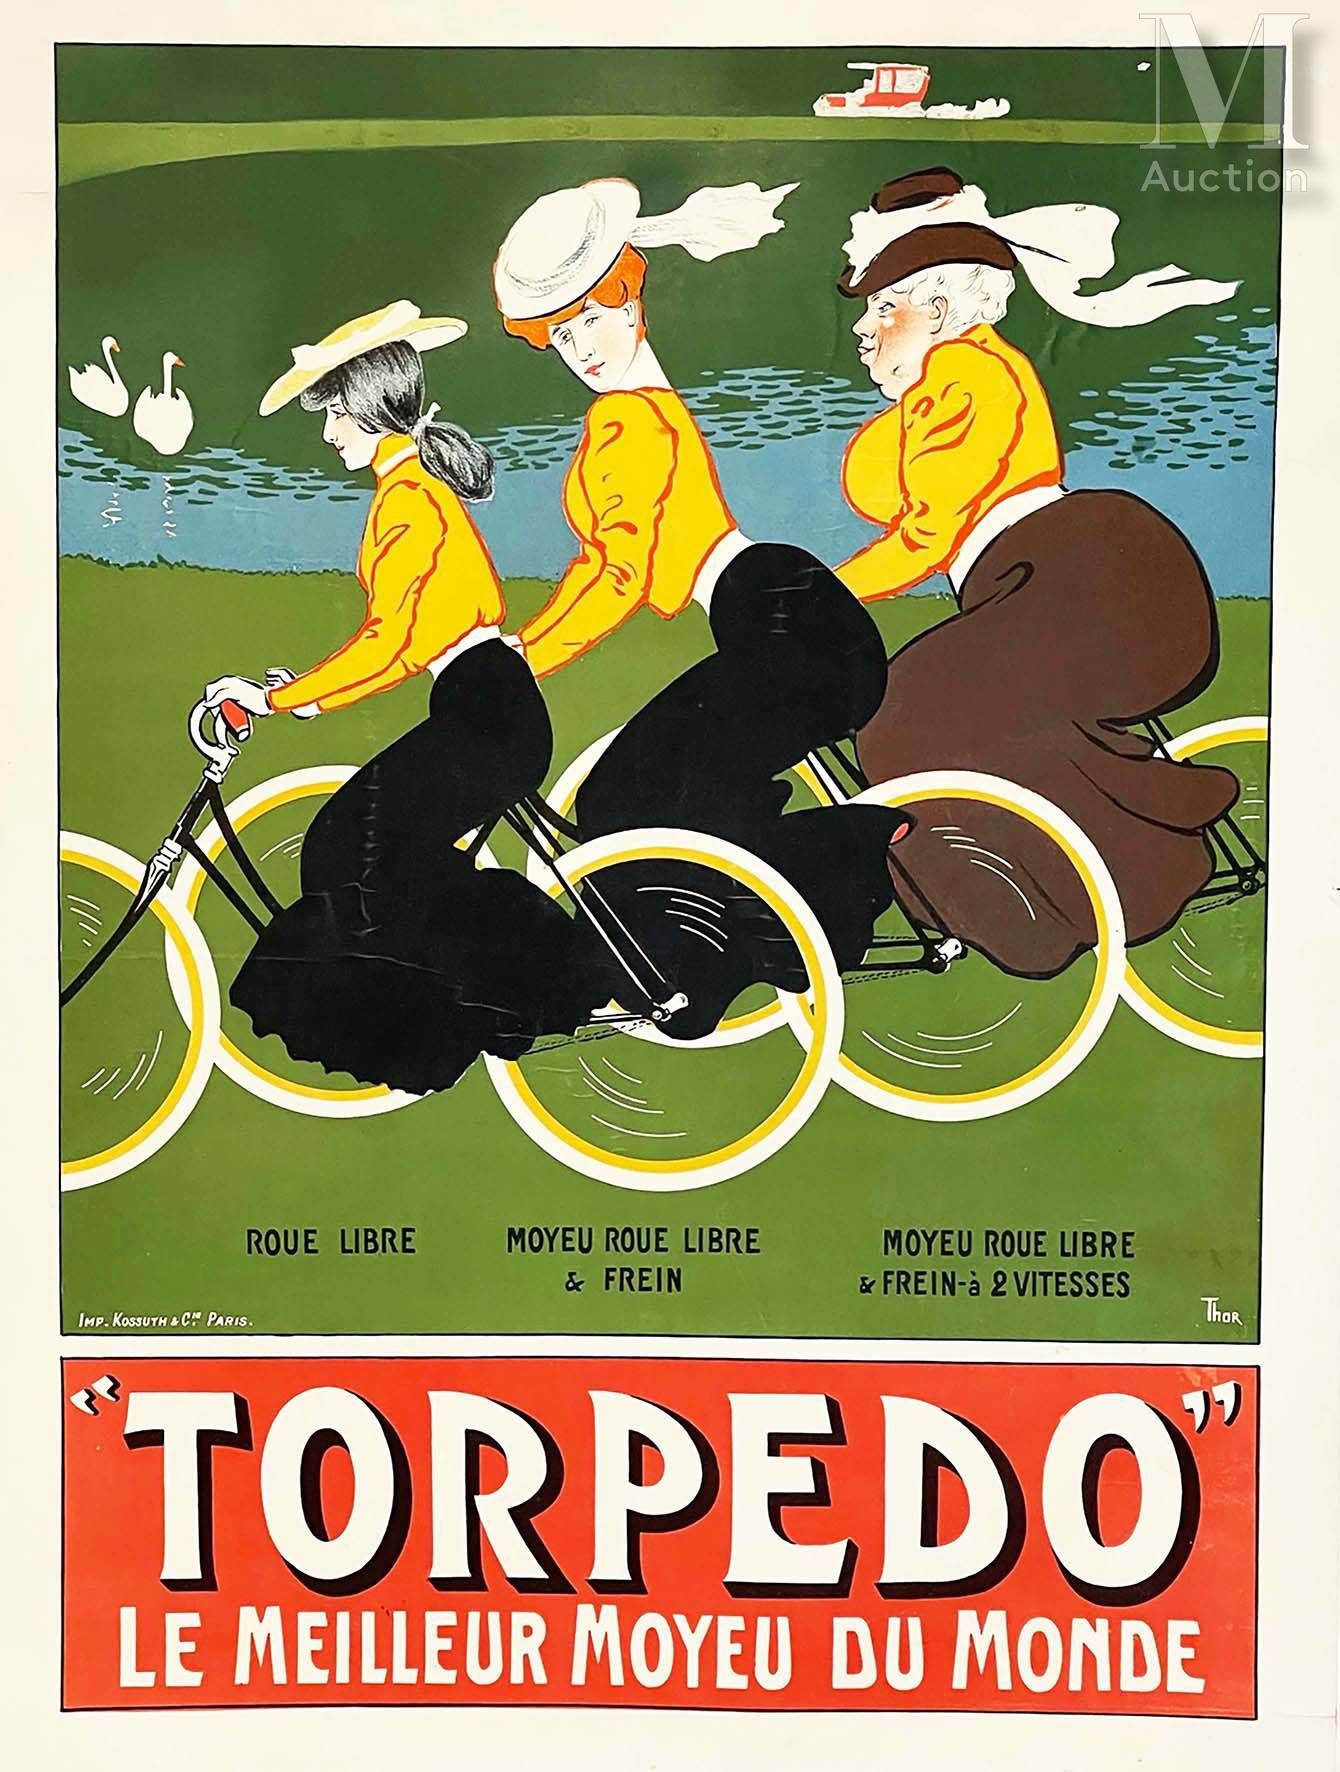 THOR Torpedo Le Meilleur Moyeu du MondeFemmes à Vélo
Torpedo Le Meilleur Moyeu d&hellip;